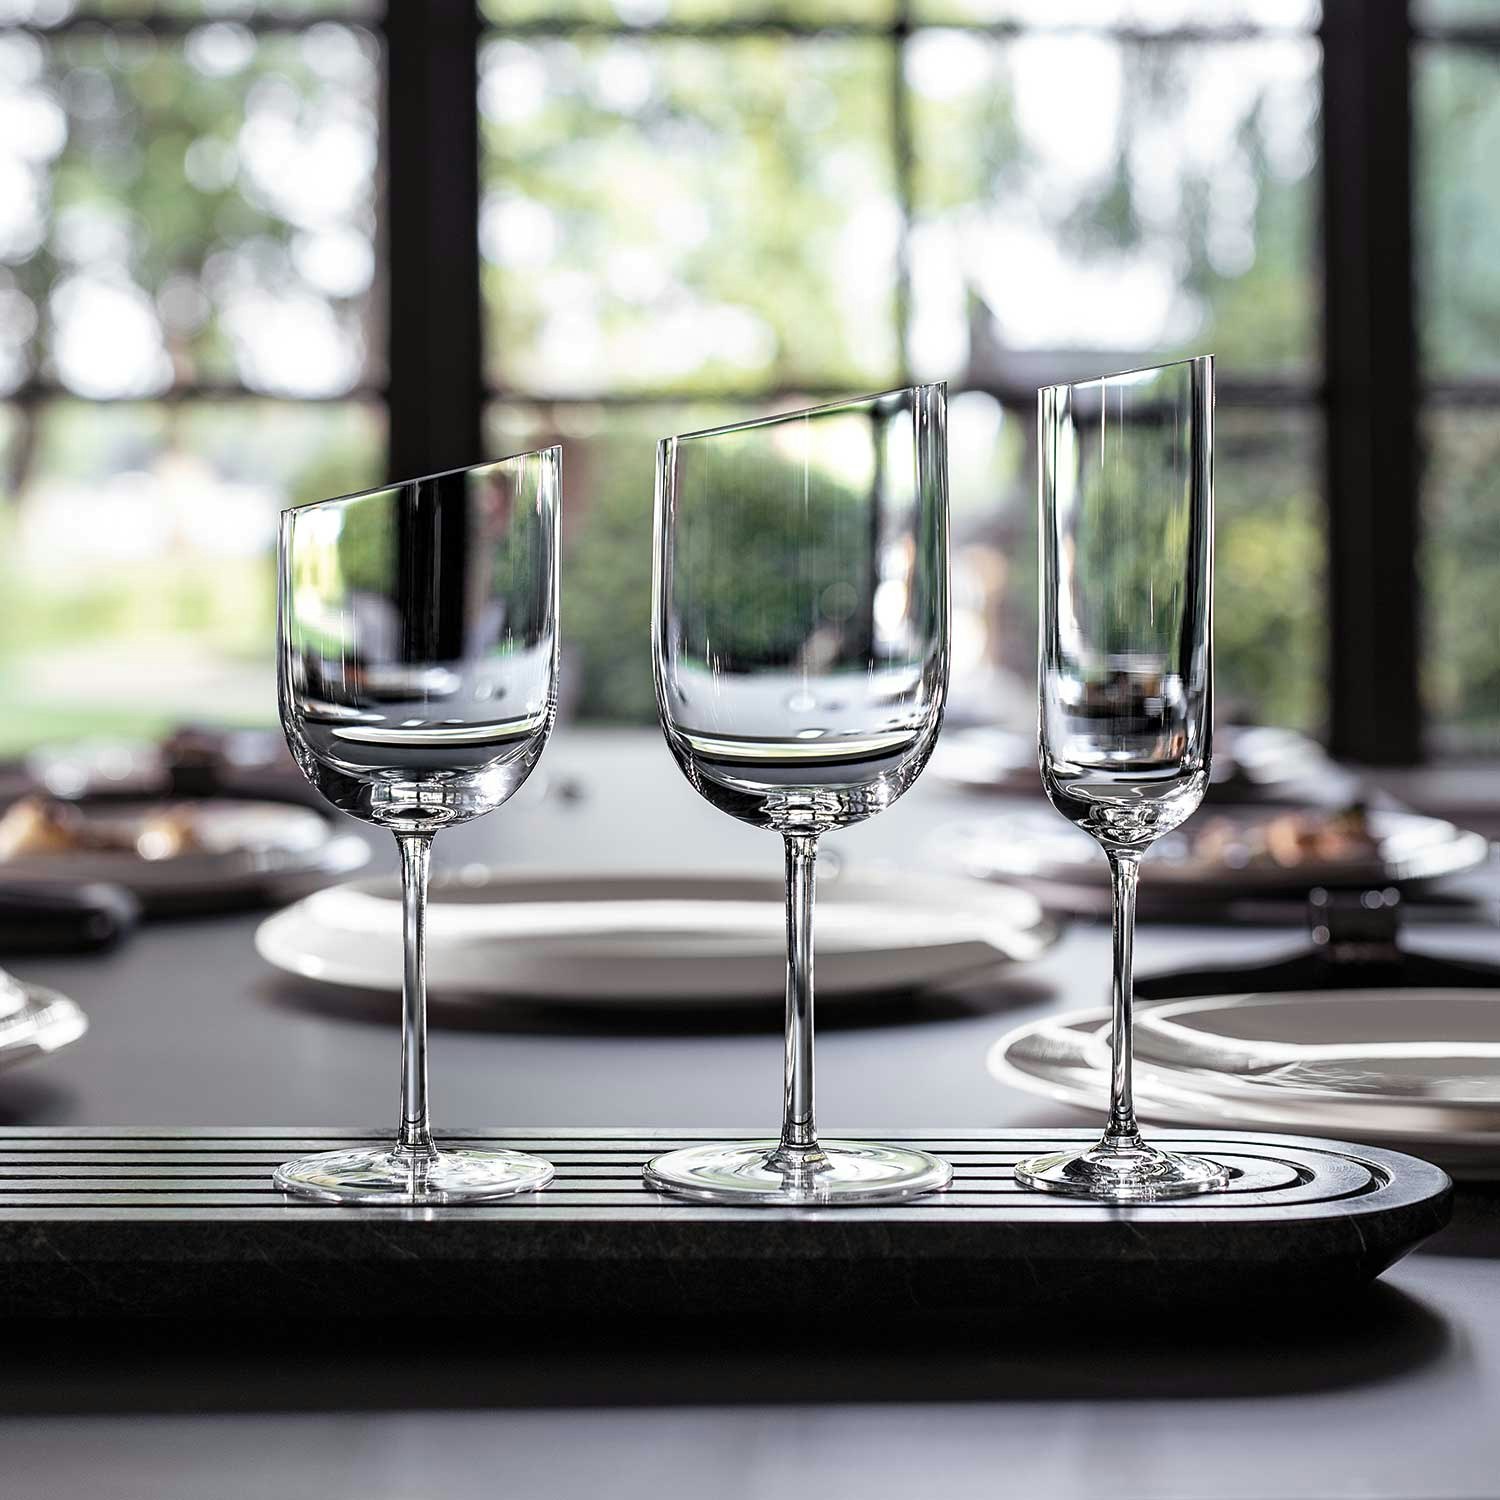 NewMoon White Wine Glass 30 cl, 4 Pcs - Villeroy & Boch @ RoyalDesign